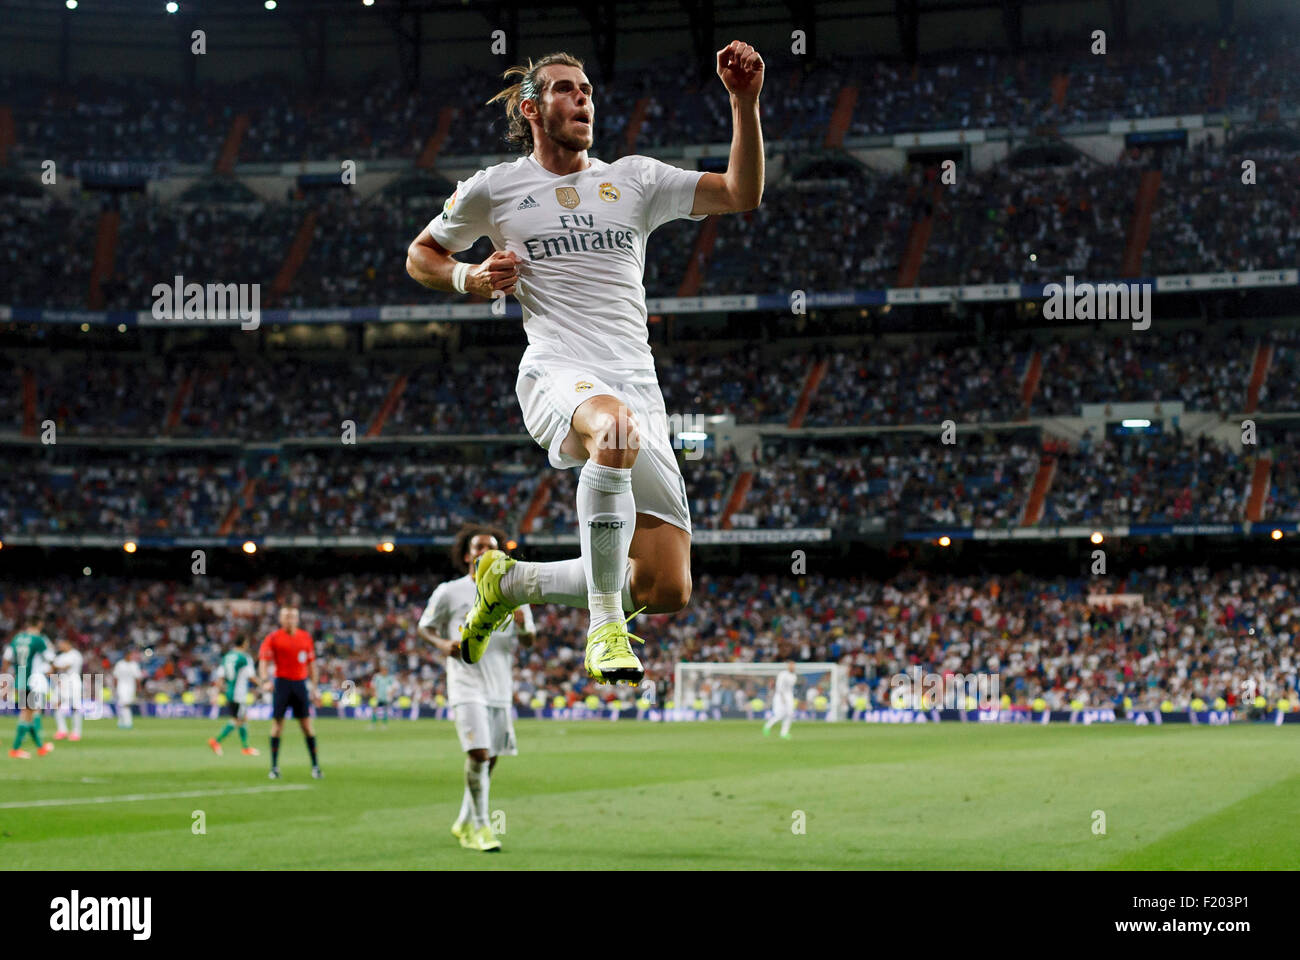 España, Madrid:Real Madrid avance Galés Gareth Bale celebra un gol durante la Liga española 2015/16 Foto de stock